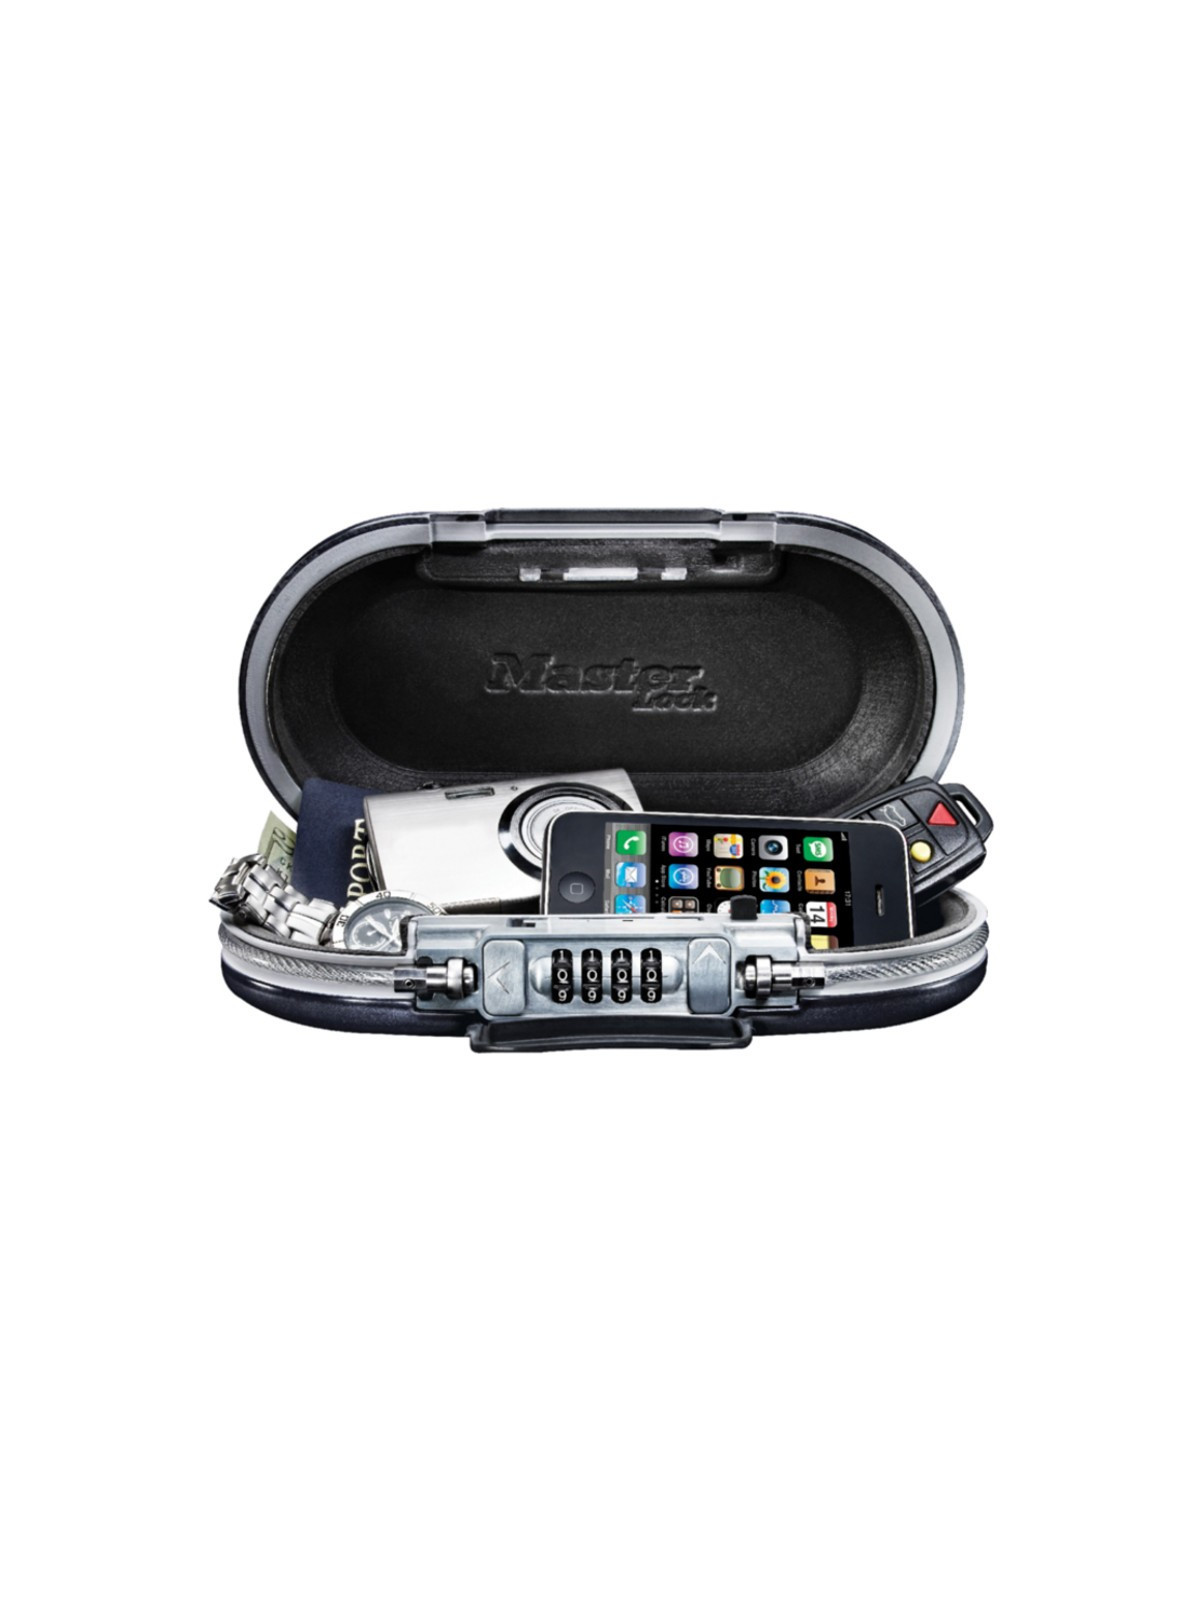 Mini-coffre portable à combinaison Master Lock 5900EURD ouvert